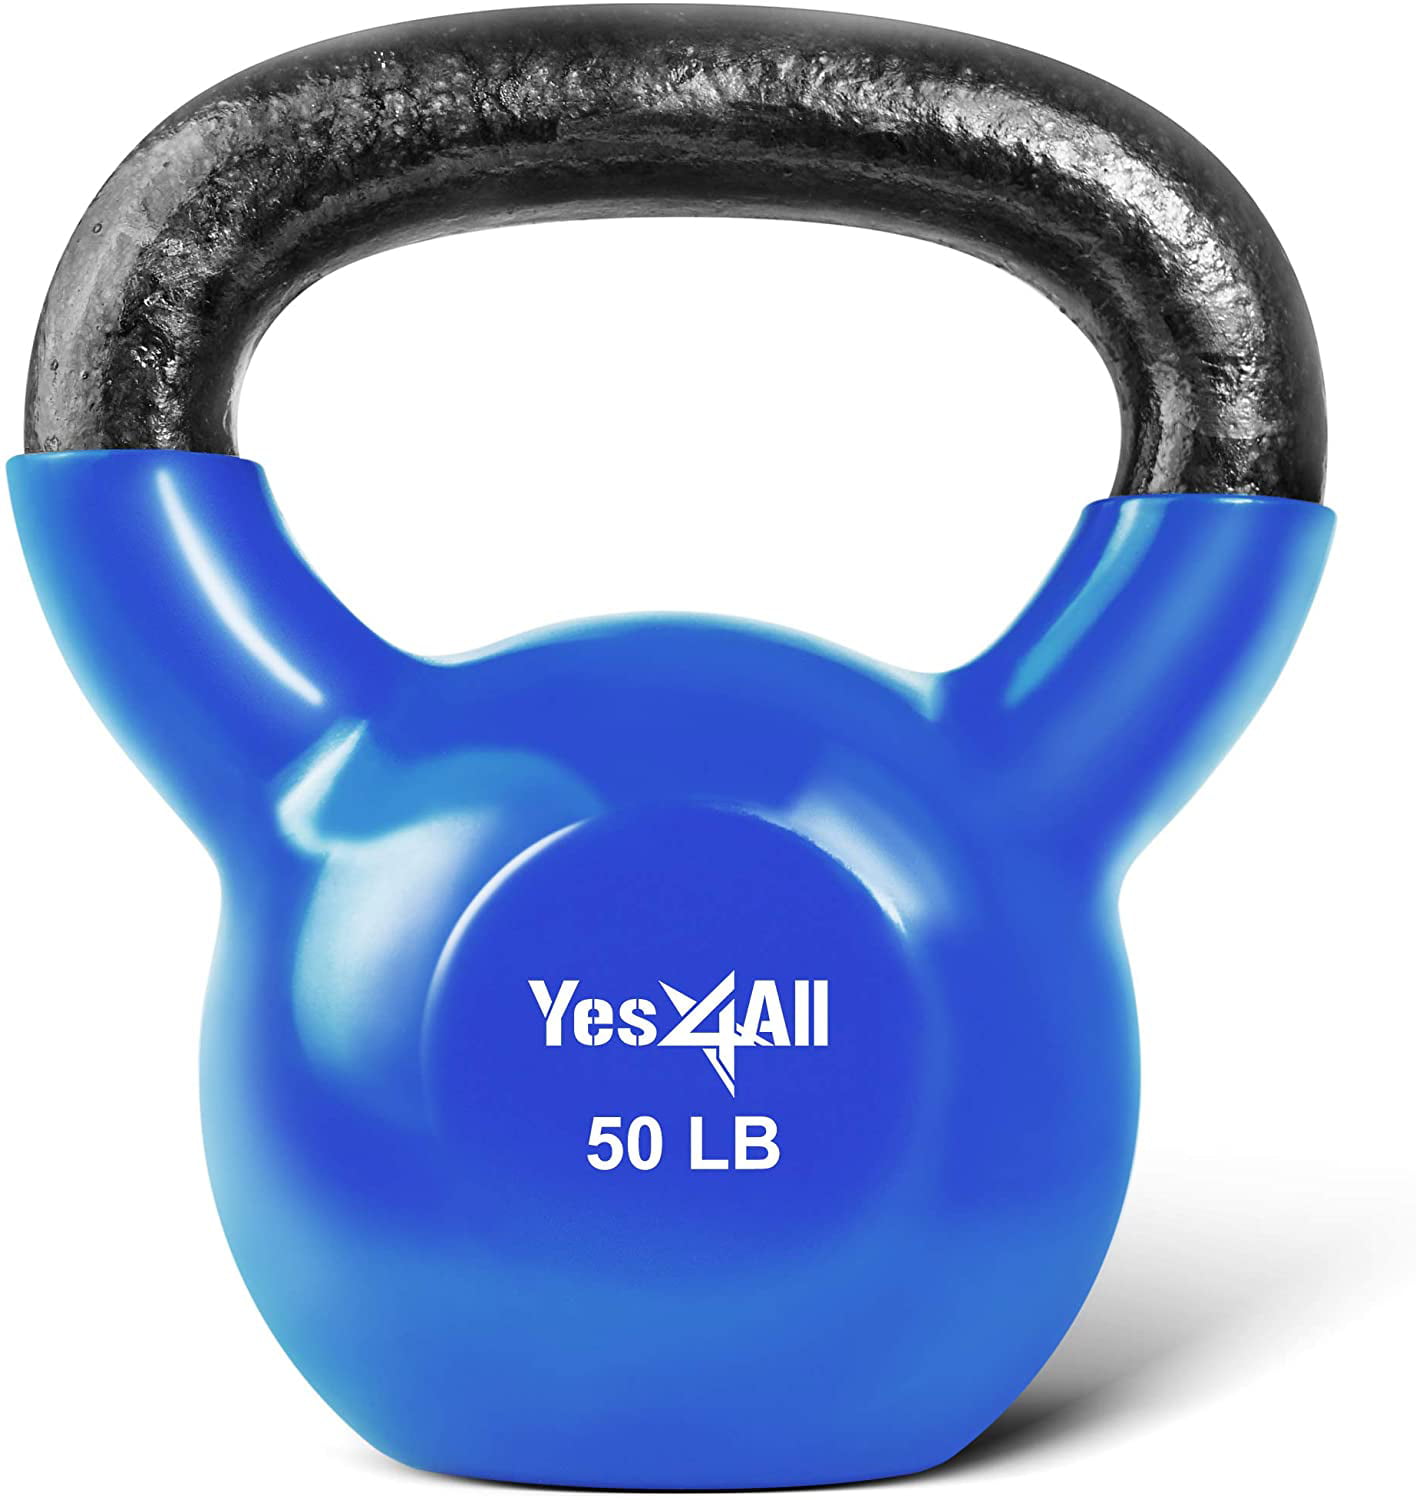 KETTLEBELL WEIGHT 50 LBS Cast Iron Strength Training Fitness Dumbbell Exercise 